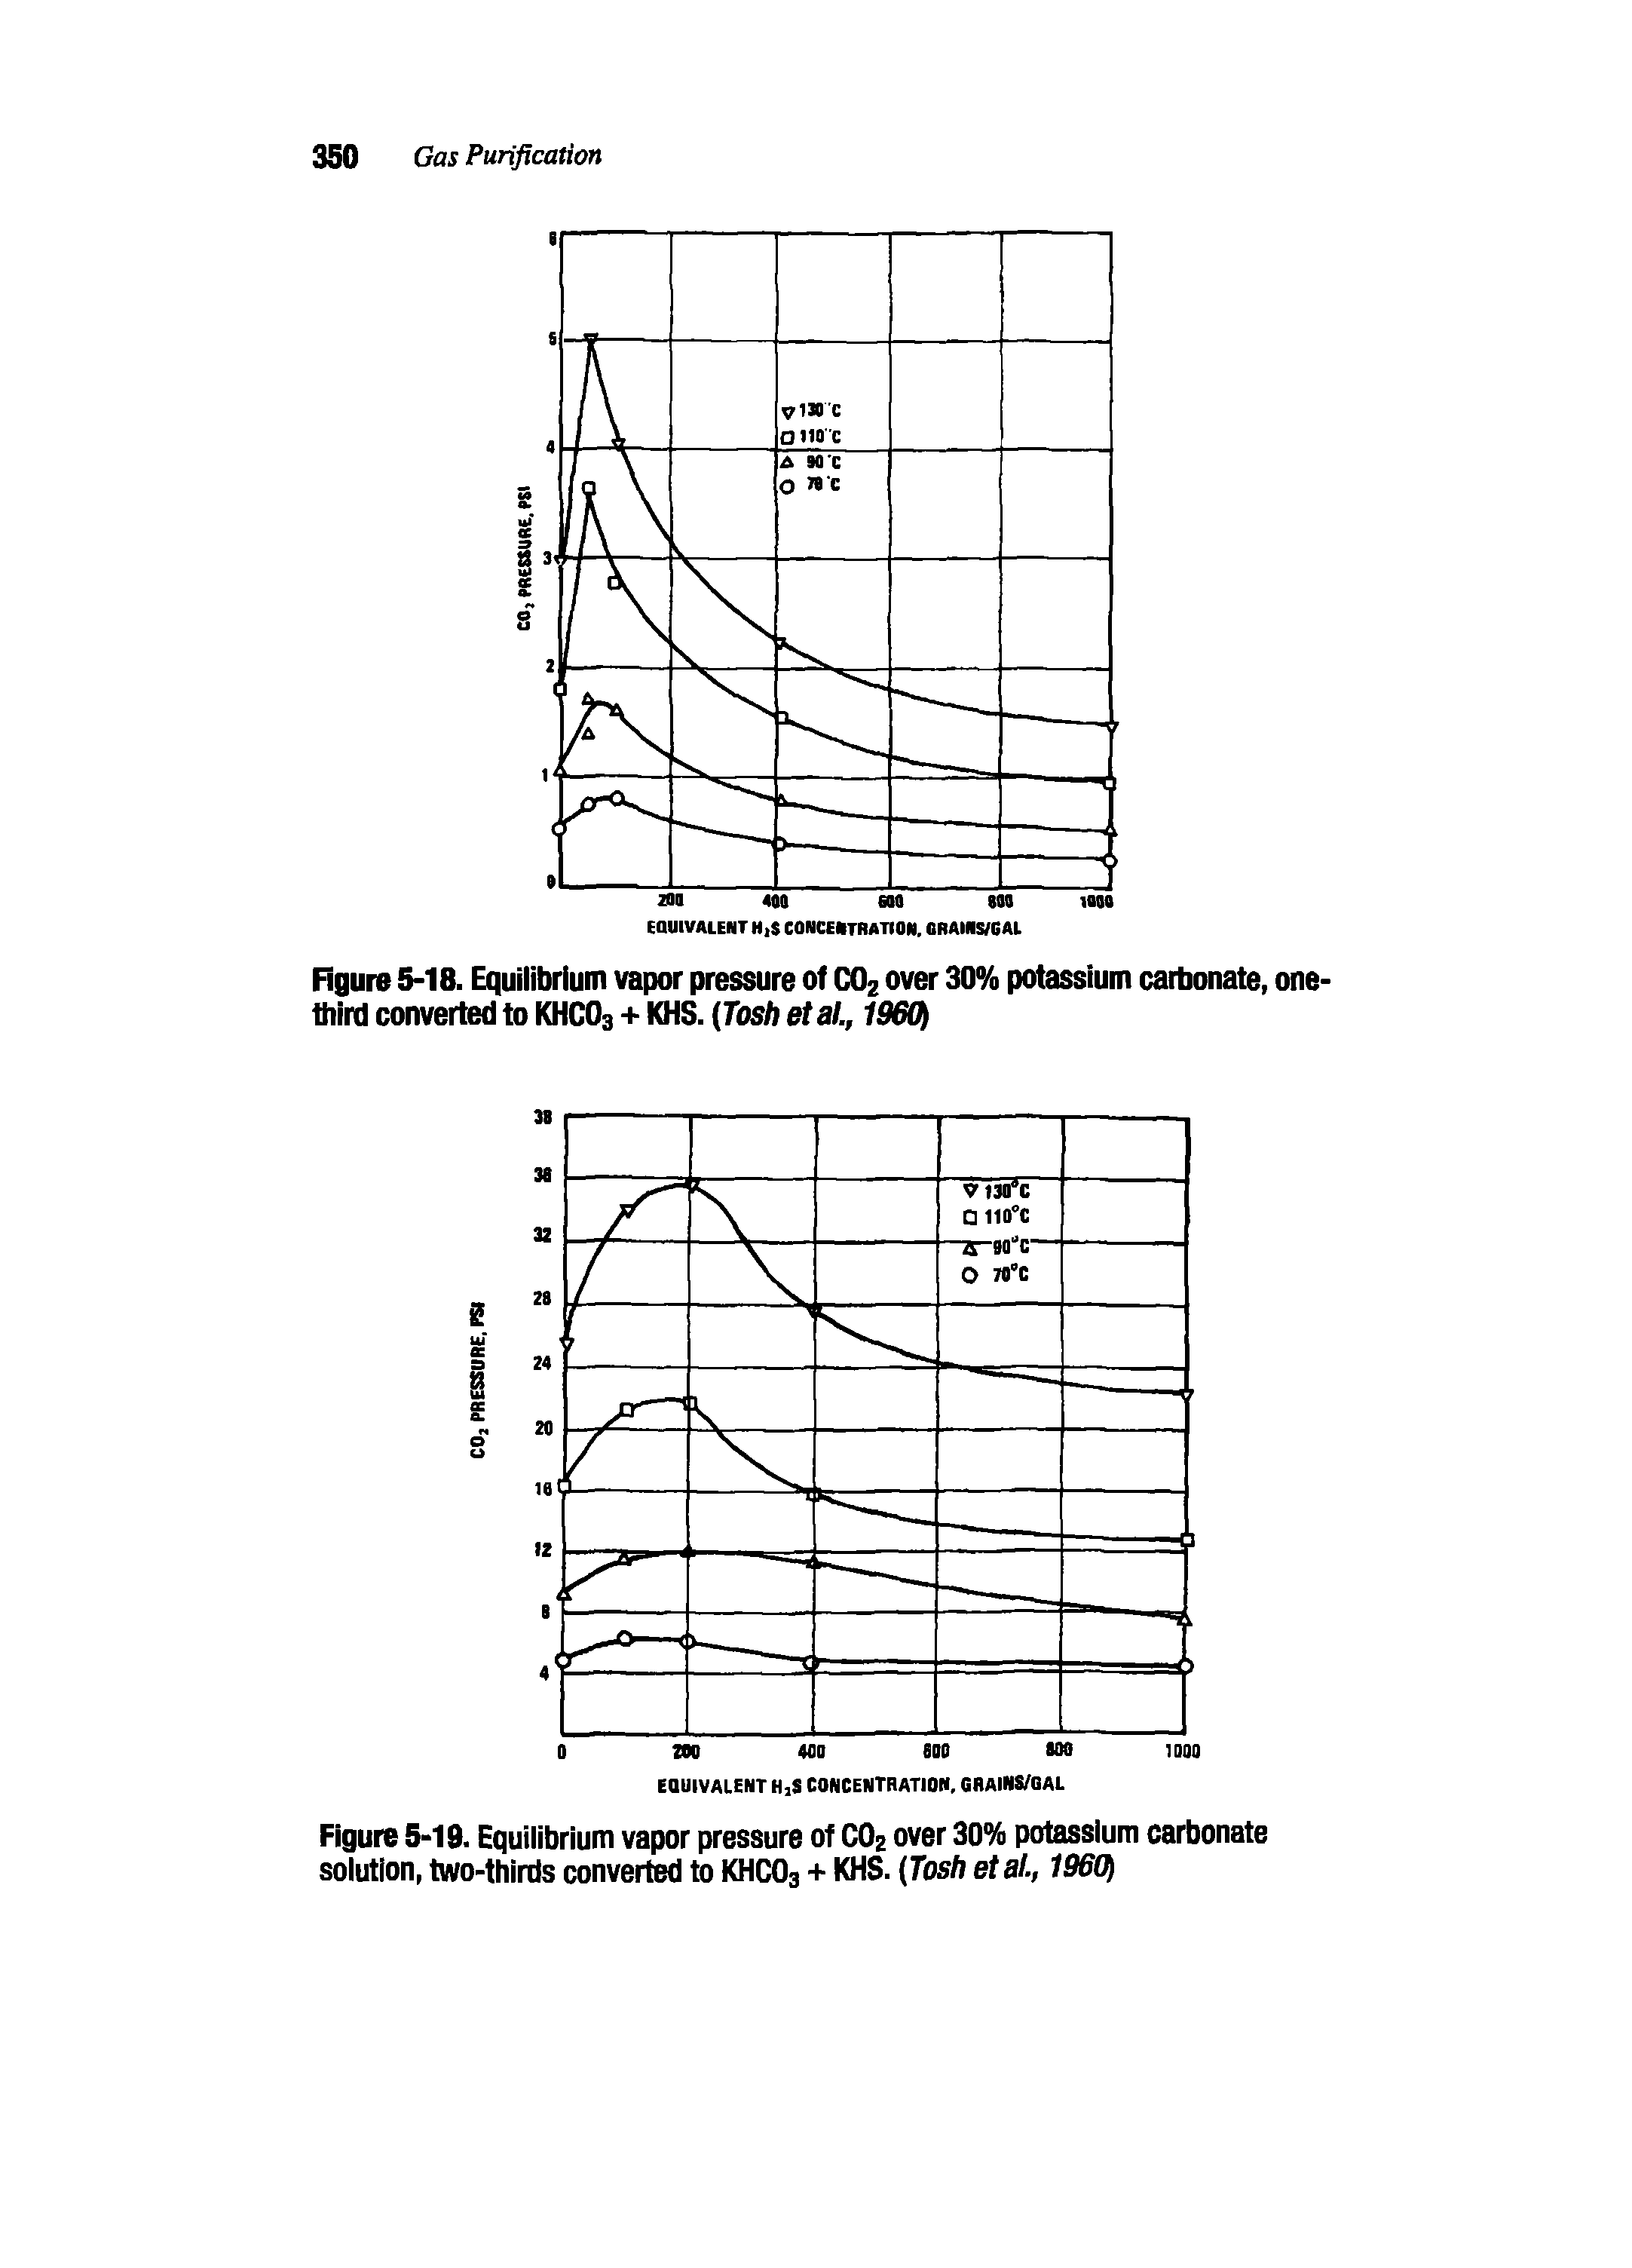 Figure 5-19. Equilibrium vapor pressure of CO2 over 30% potassium carbonate solution, two-thirds converted to KHCO3 + lOtS. Tosh etal., 1960i...